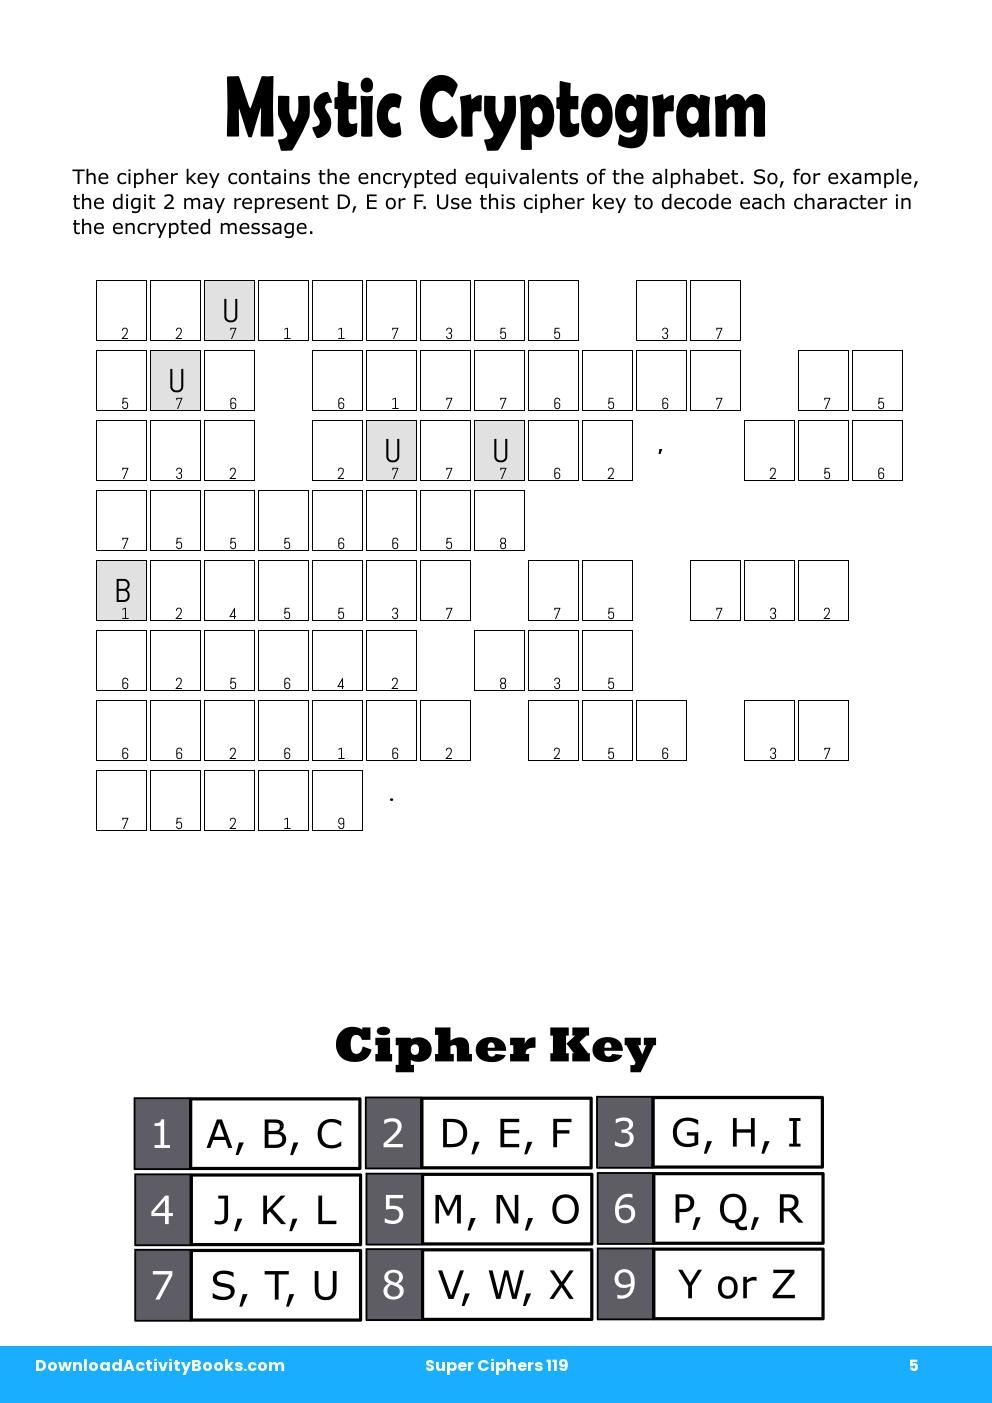 Mystic Cryptogram in Super Ciphers 119